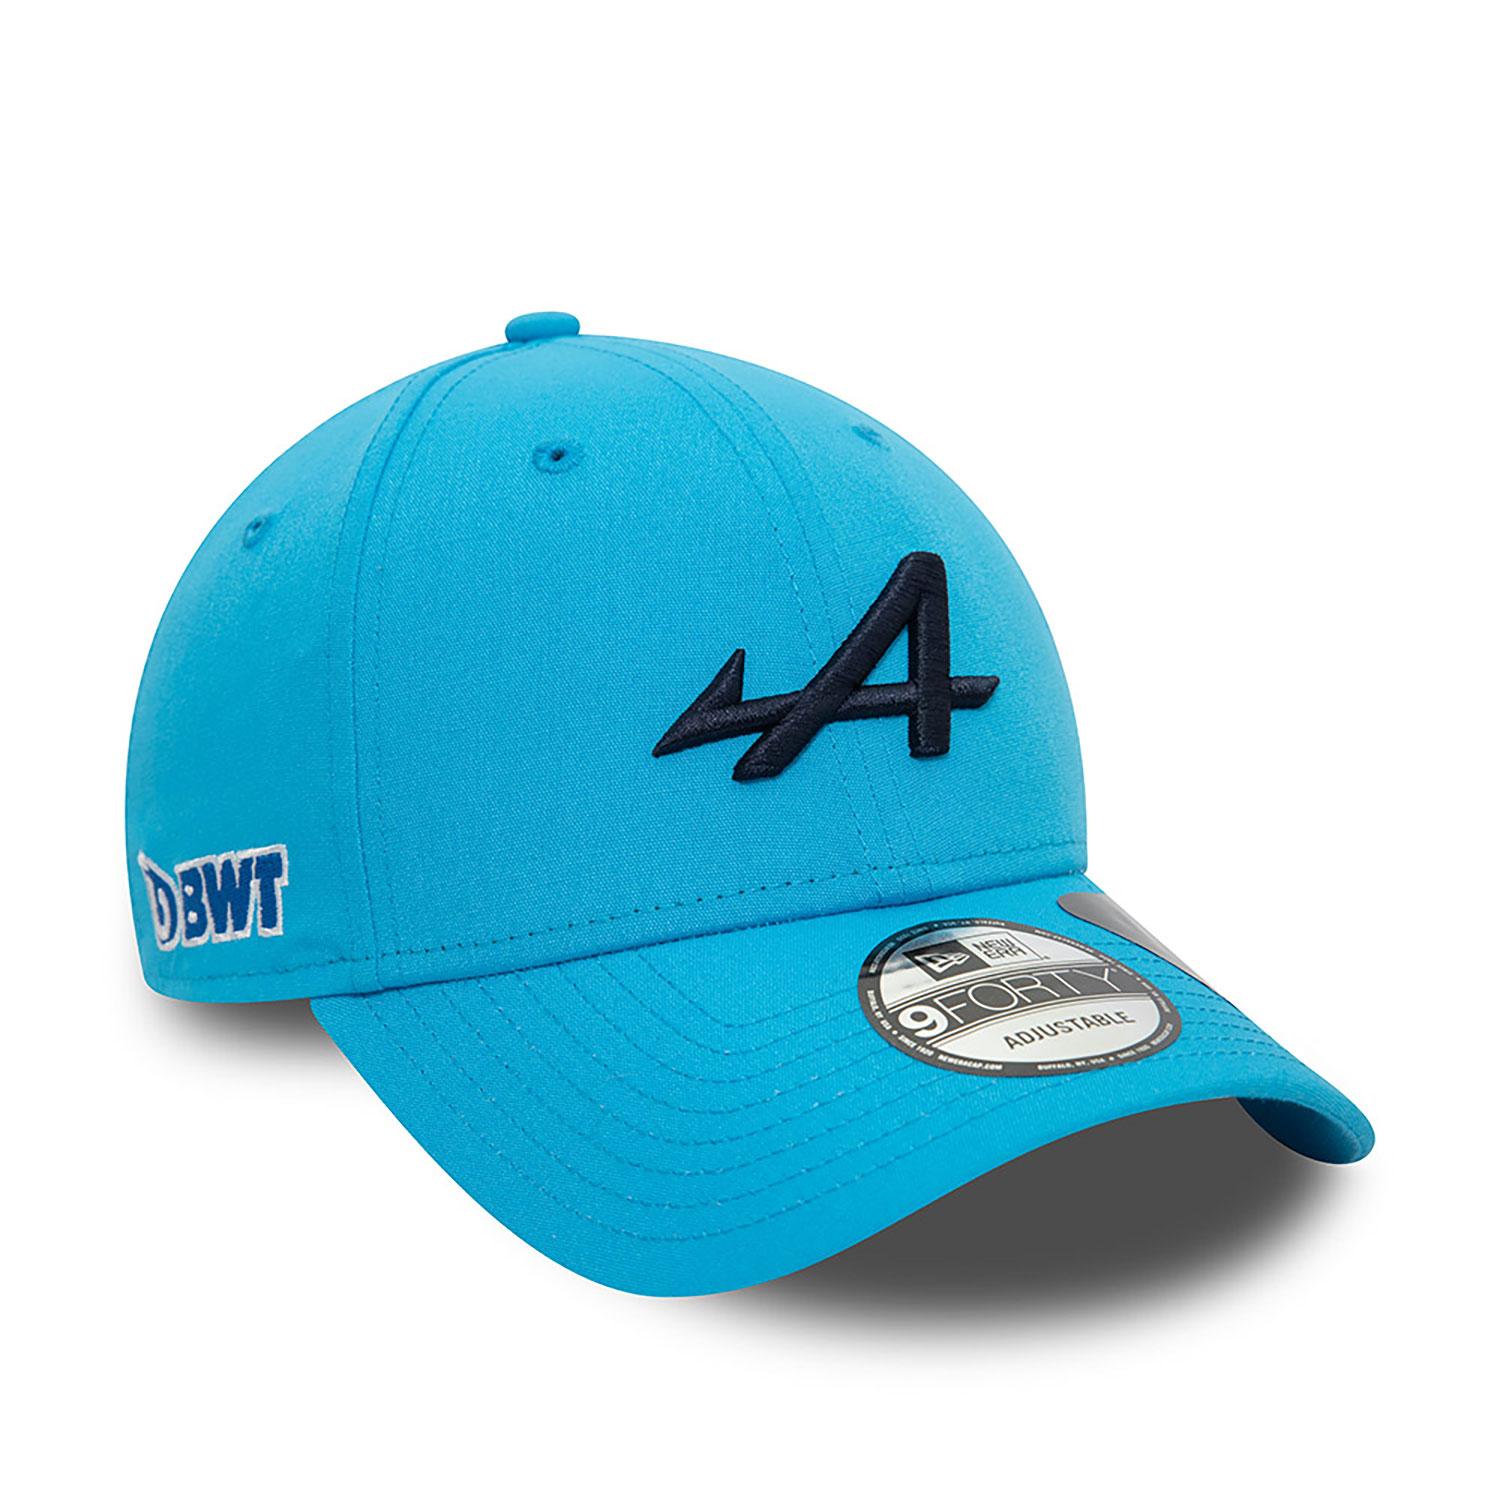 Alpine Racing Repreve Blue 9FORTY Adjustable Cap